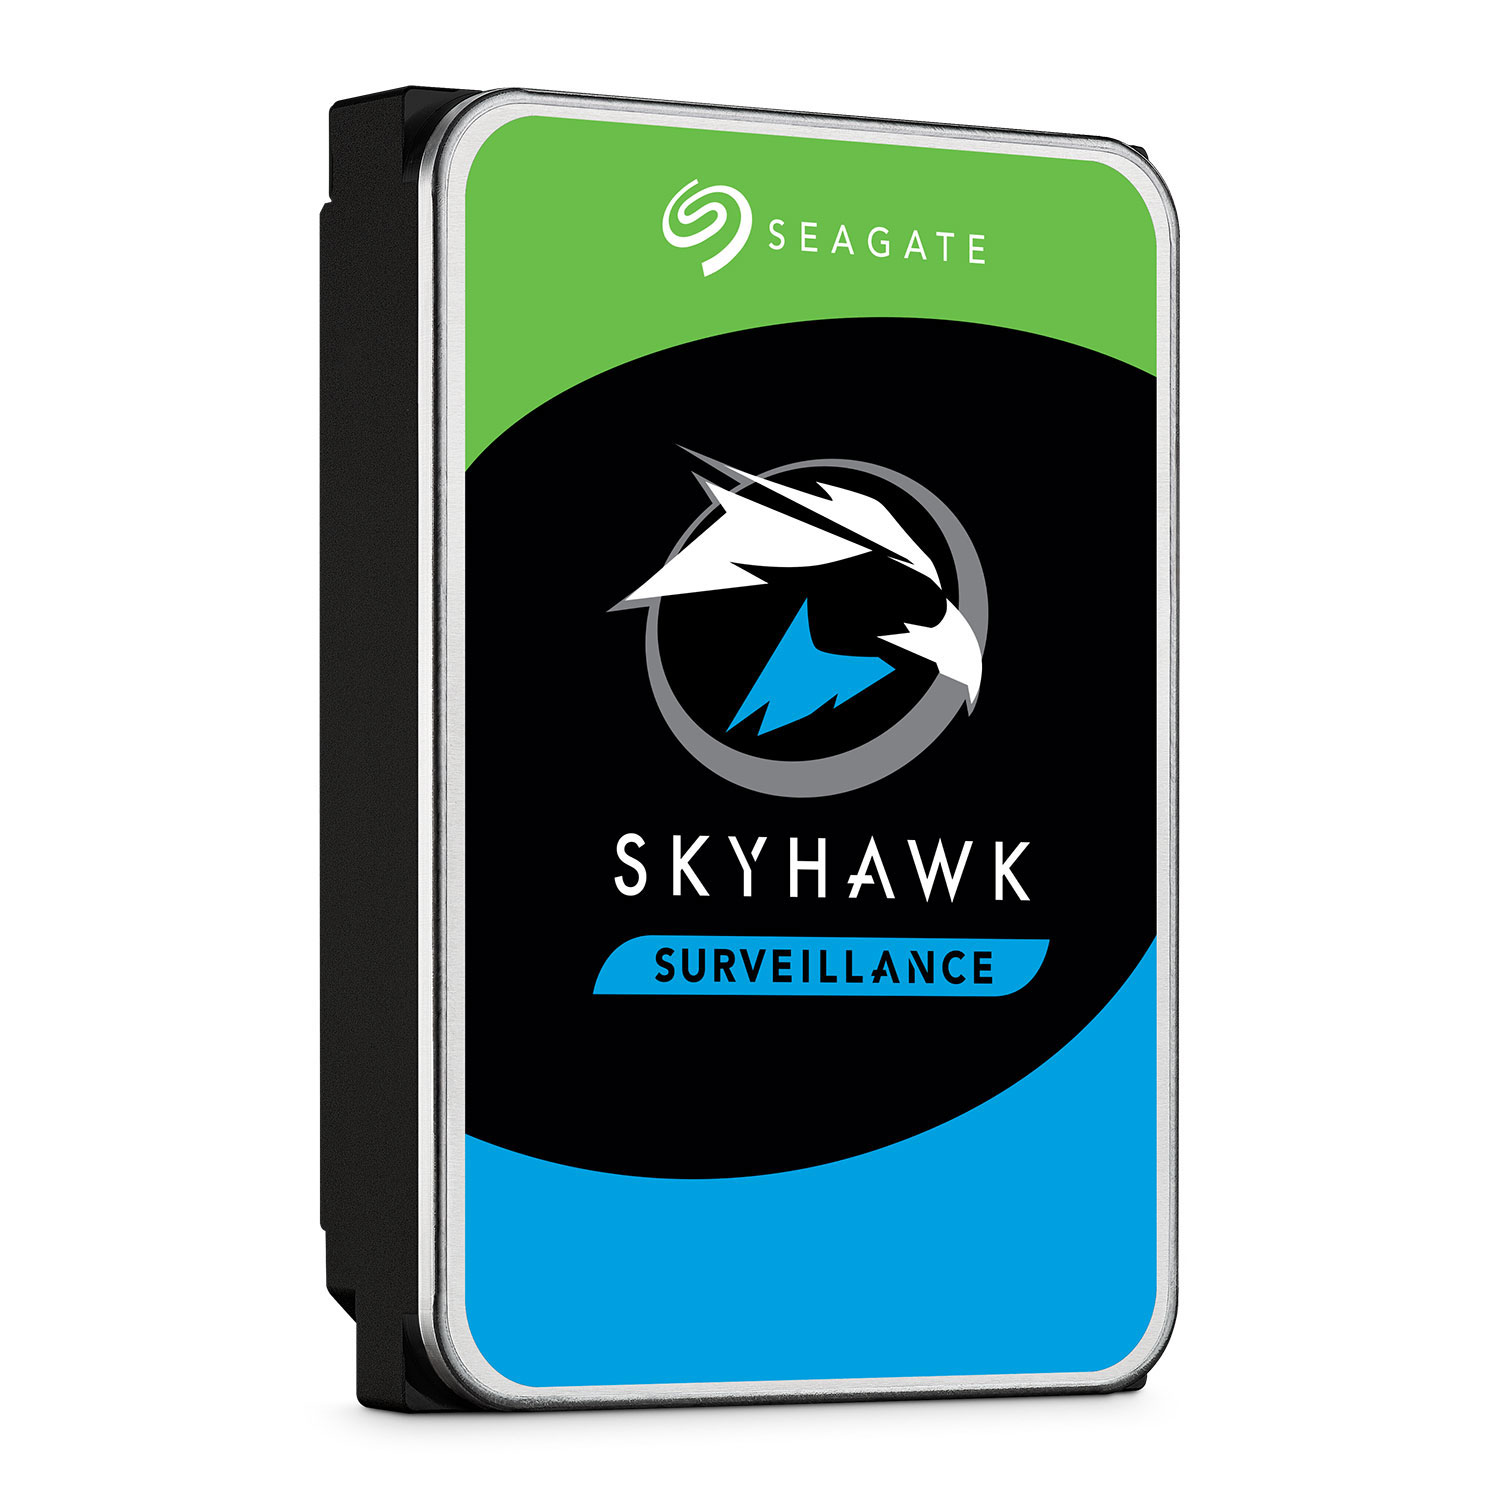 Seagate SkyHawk 4TB 3.5" SATA Surveillance HDD/Hard Drive (ST4000VX013)